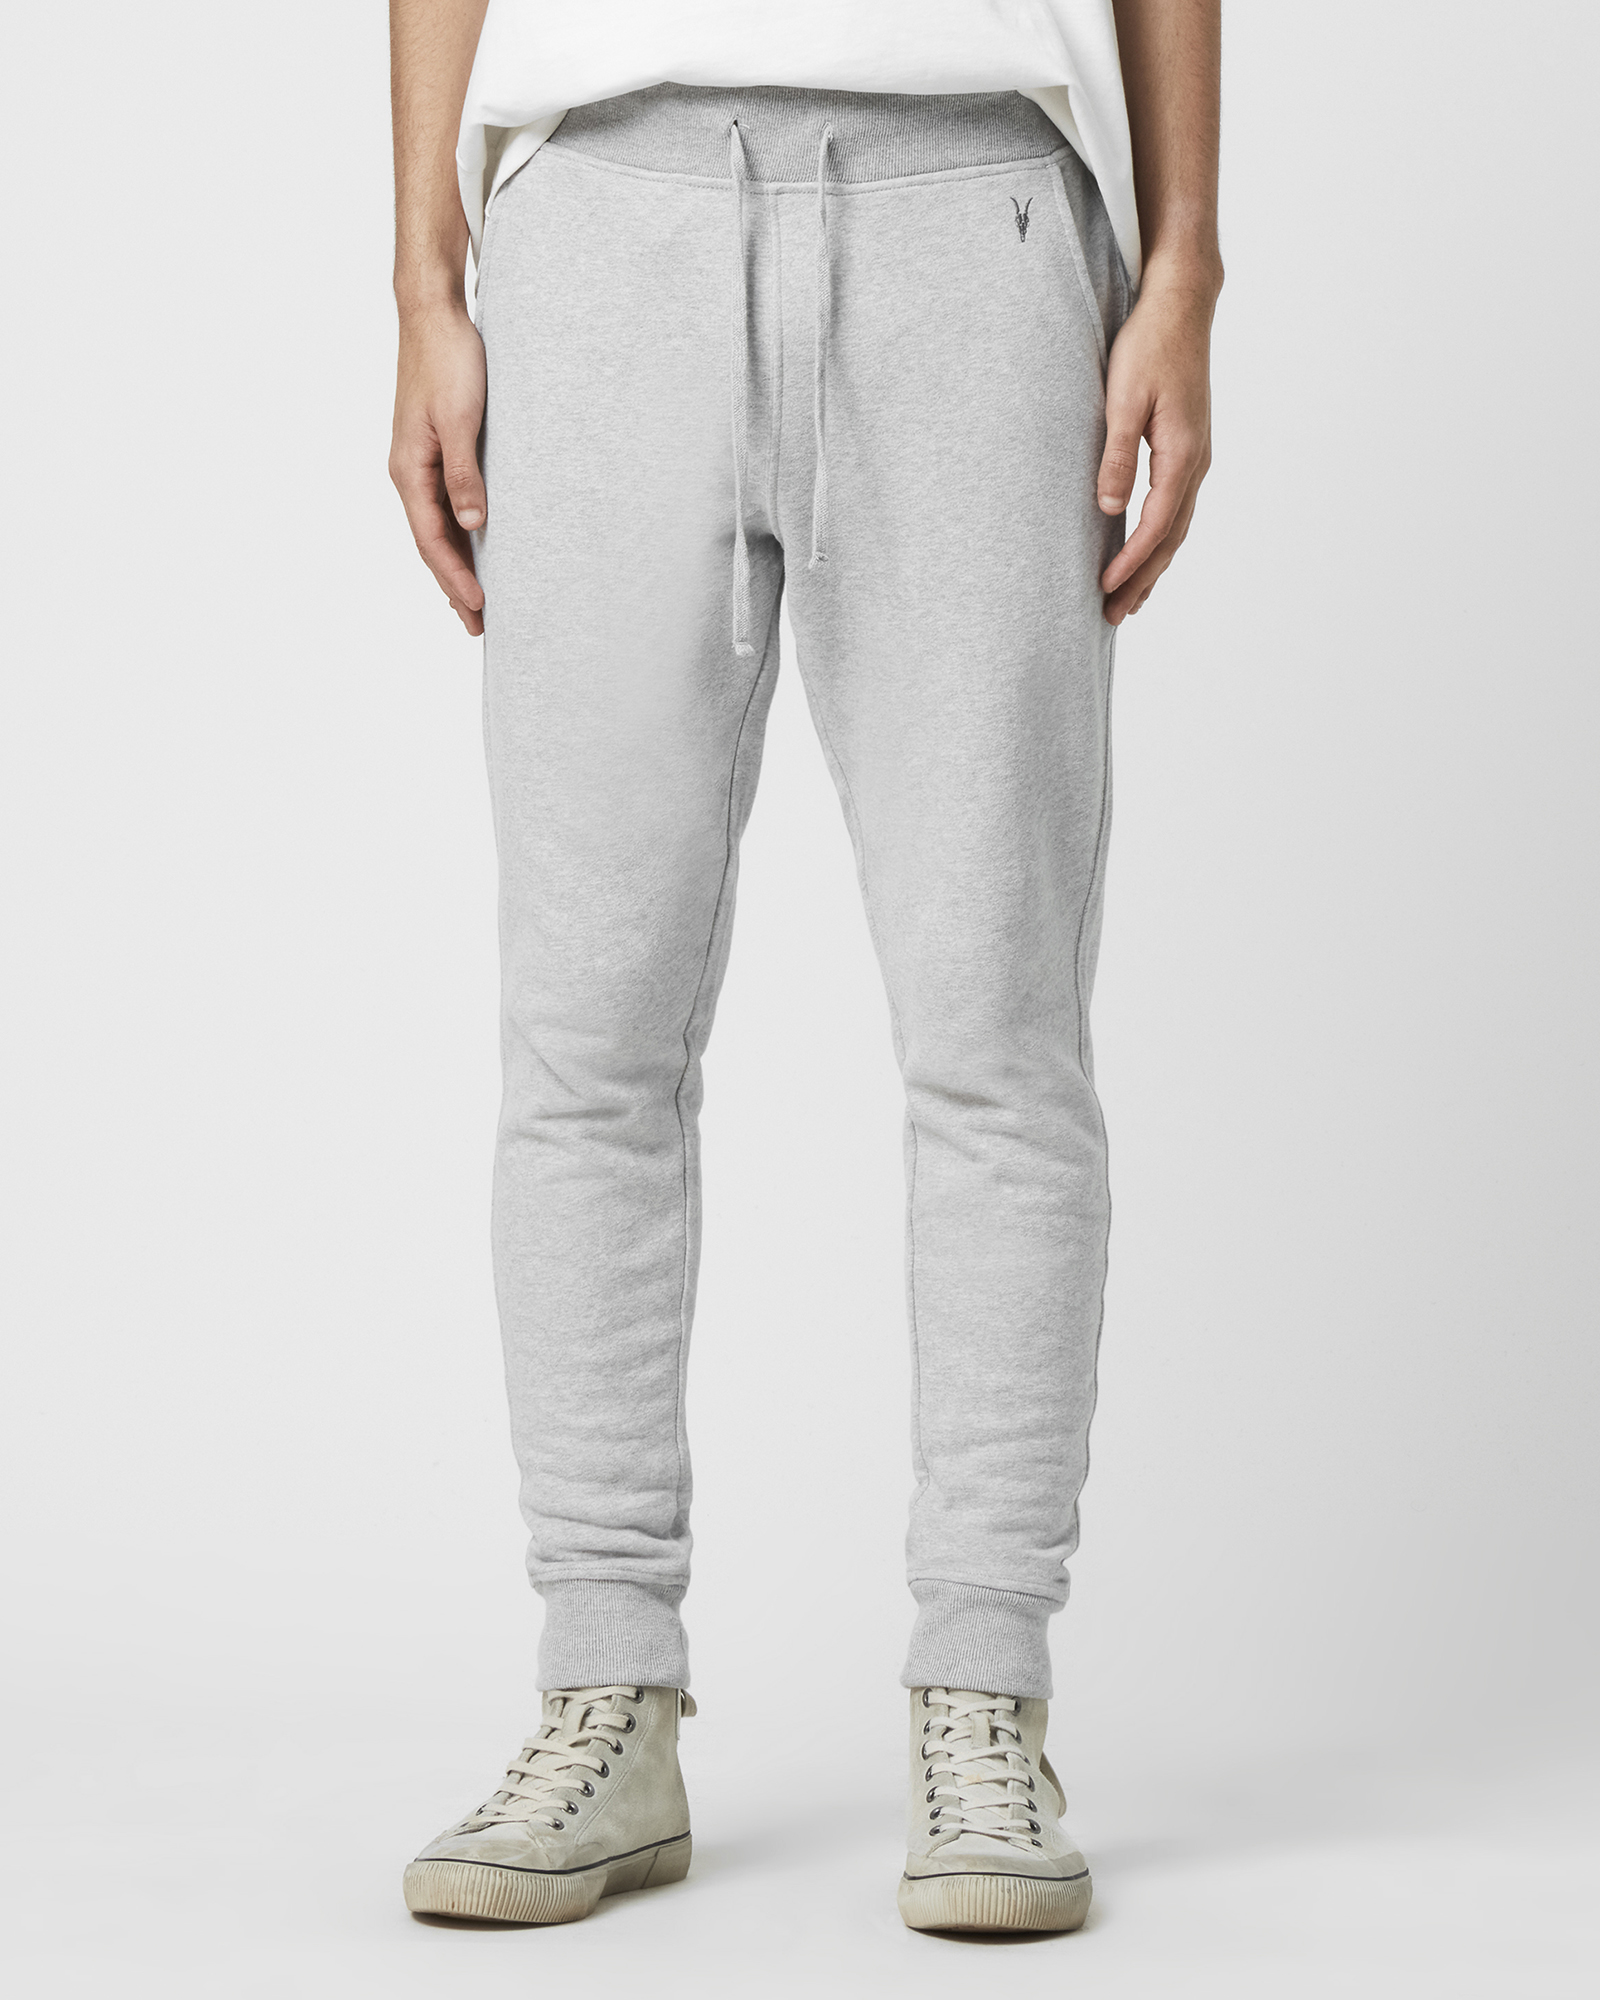 AllSaints Men's Cotton Slim Fit Raven Cuffed Sweatpants, Grey, Size: XXL